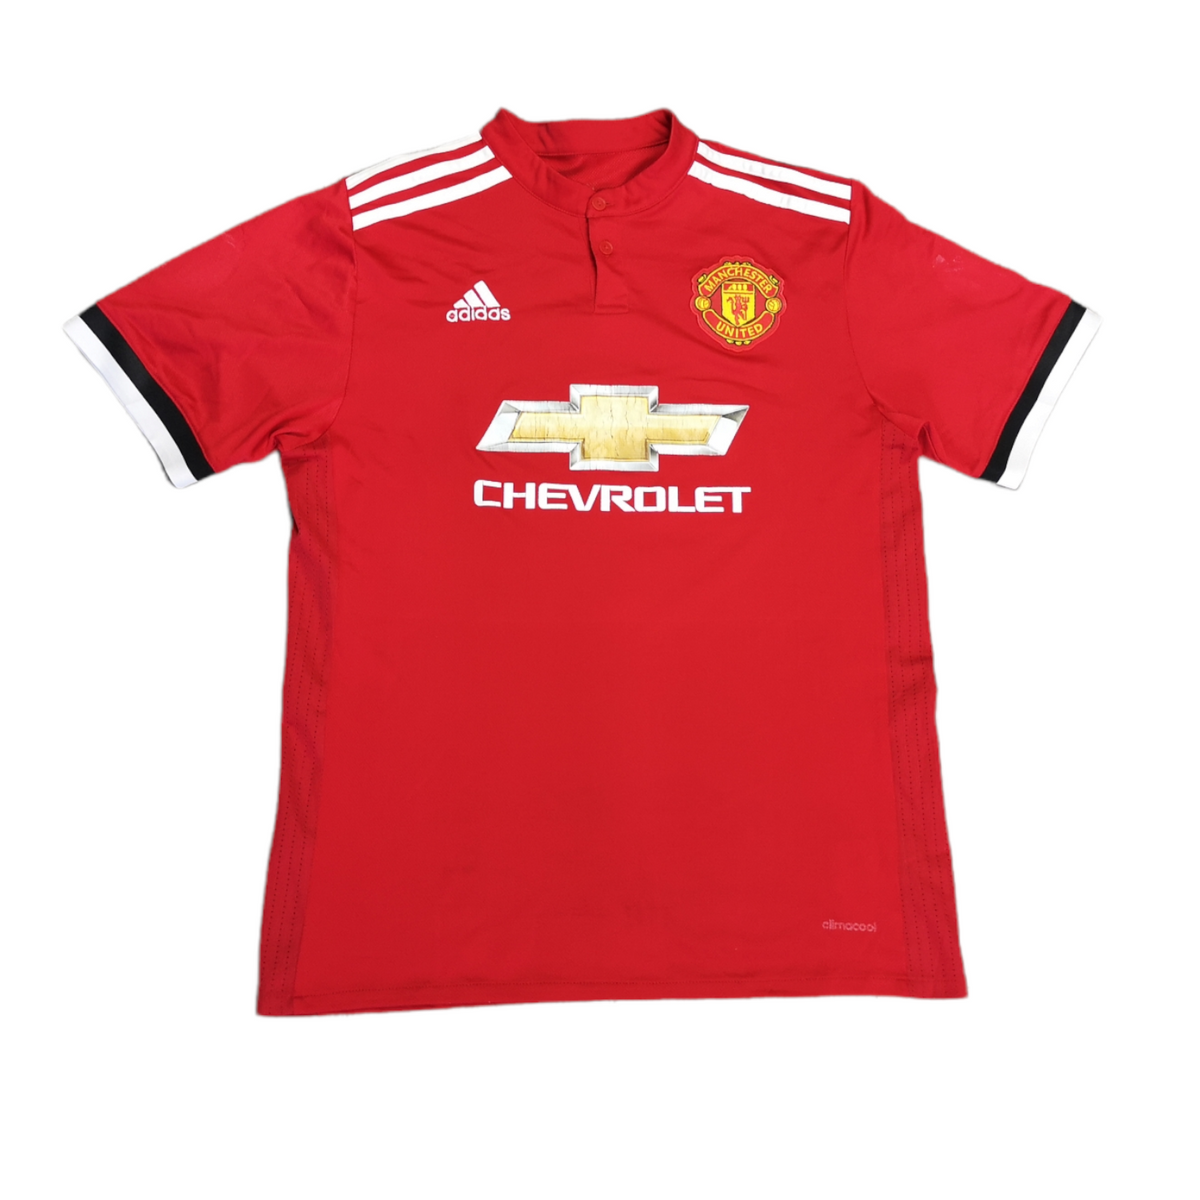 2017/2018 Adidas Manchester United Pogba 6 Home Shirt - Size Medium